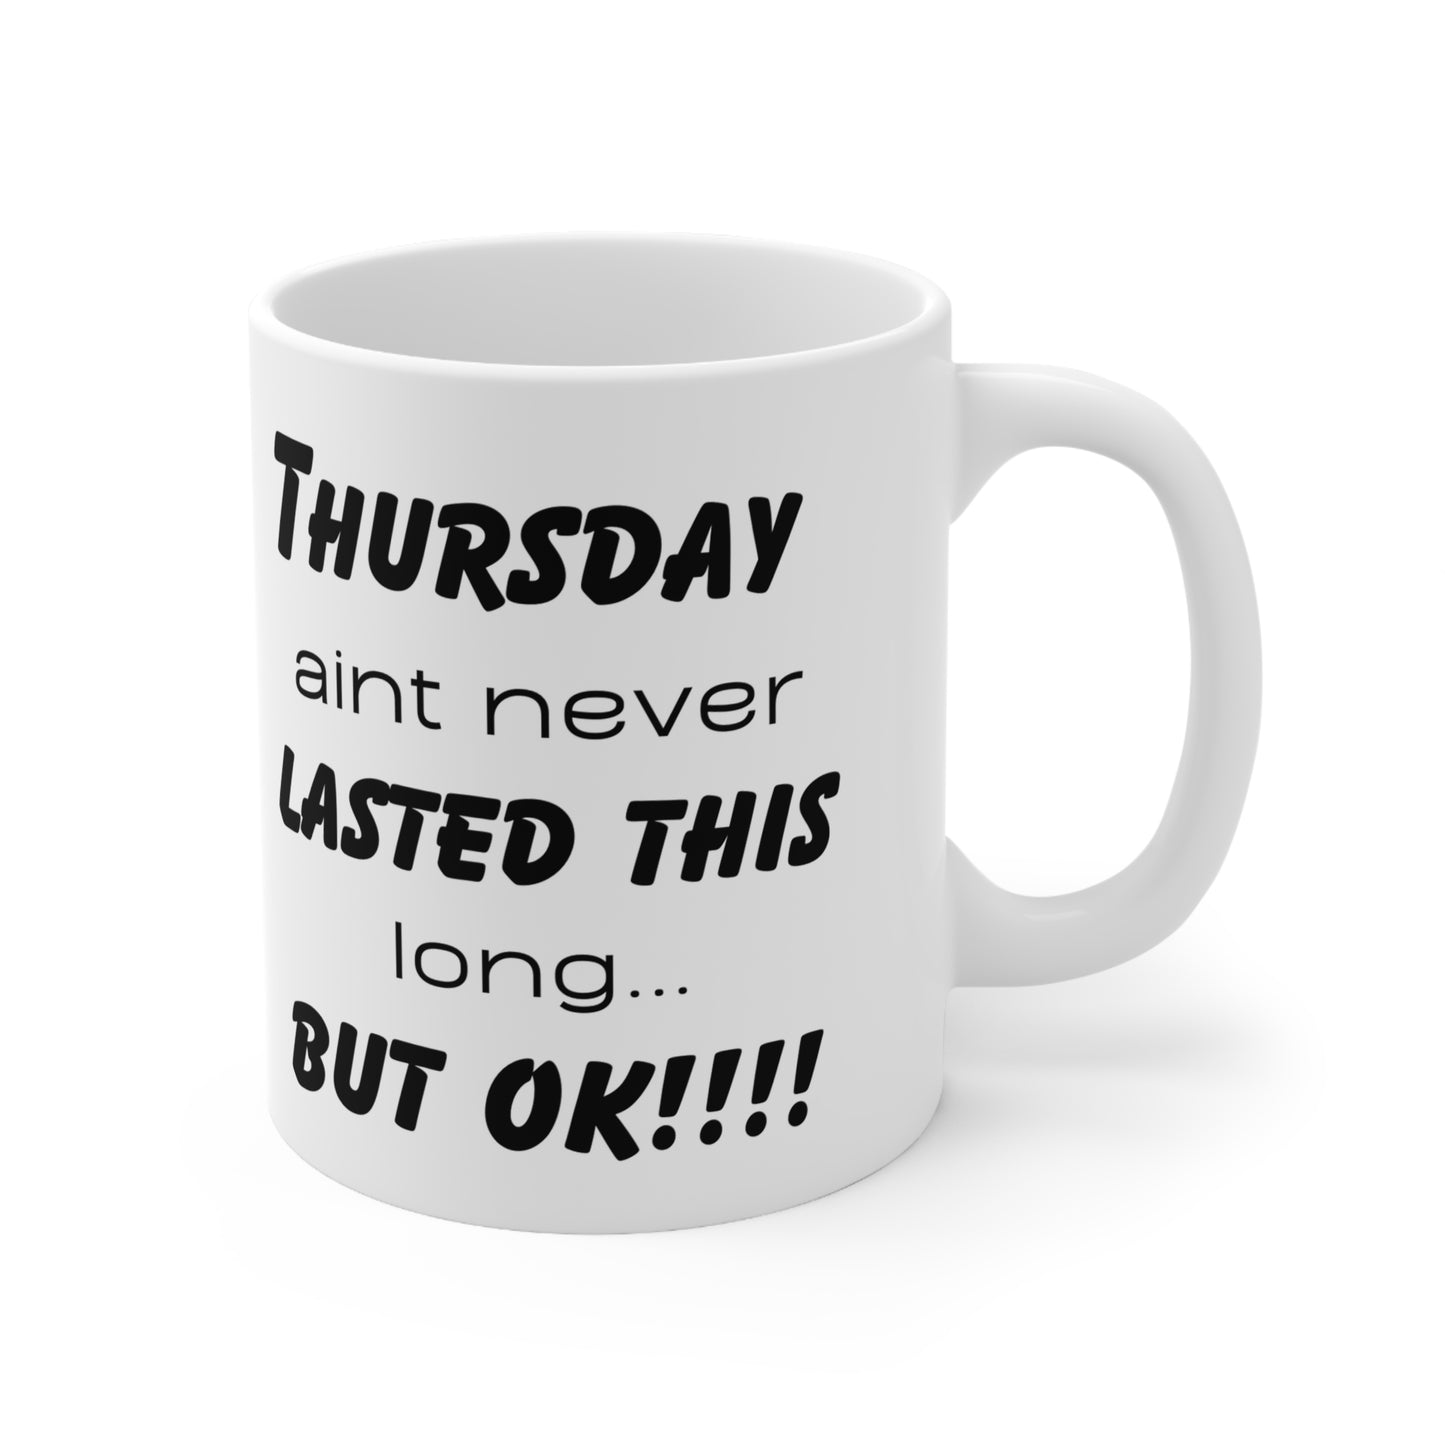 Thursday ain't never this long ...but ok! Ceramic Coffee Cups, 11oz, 15oz